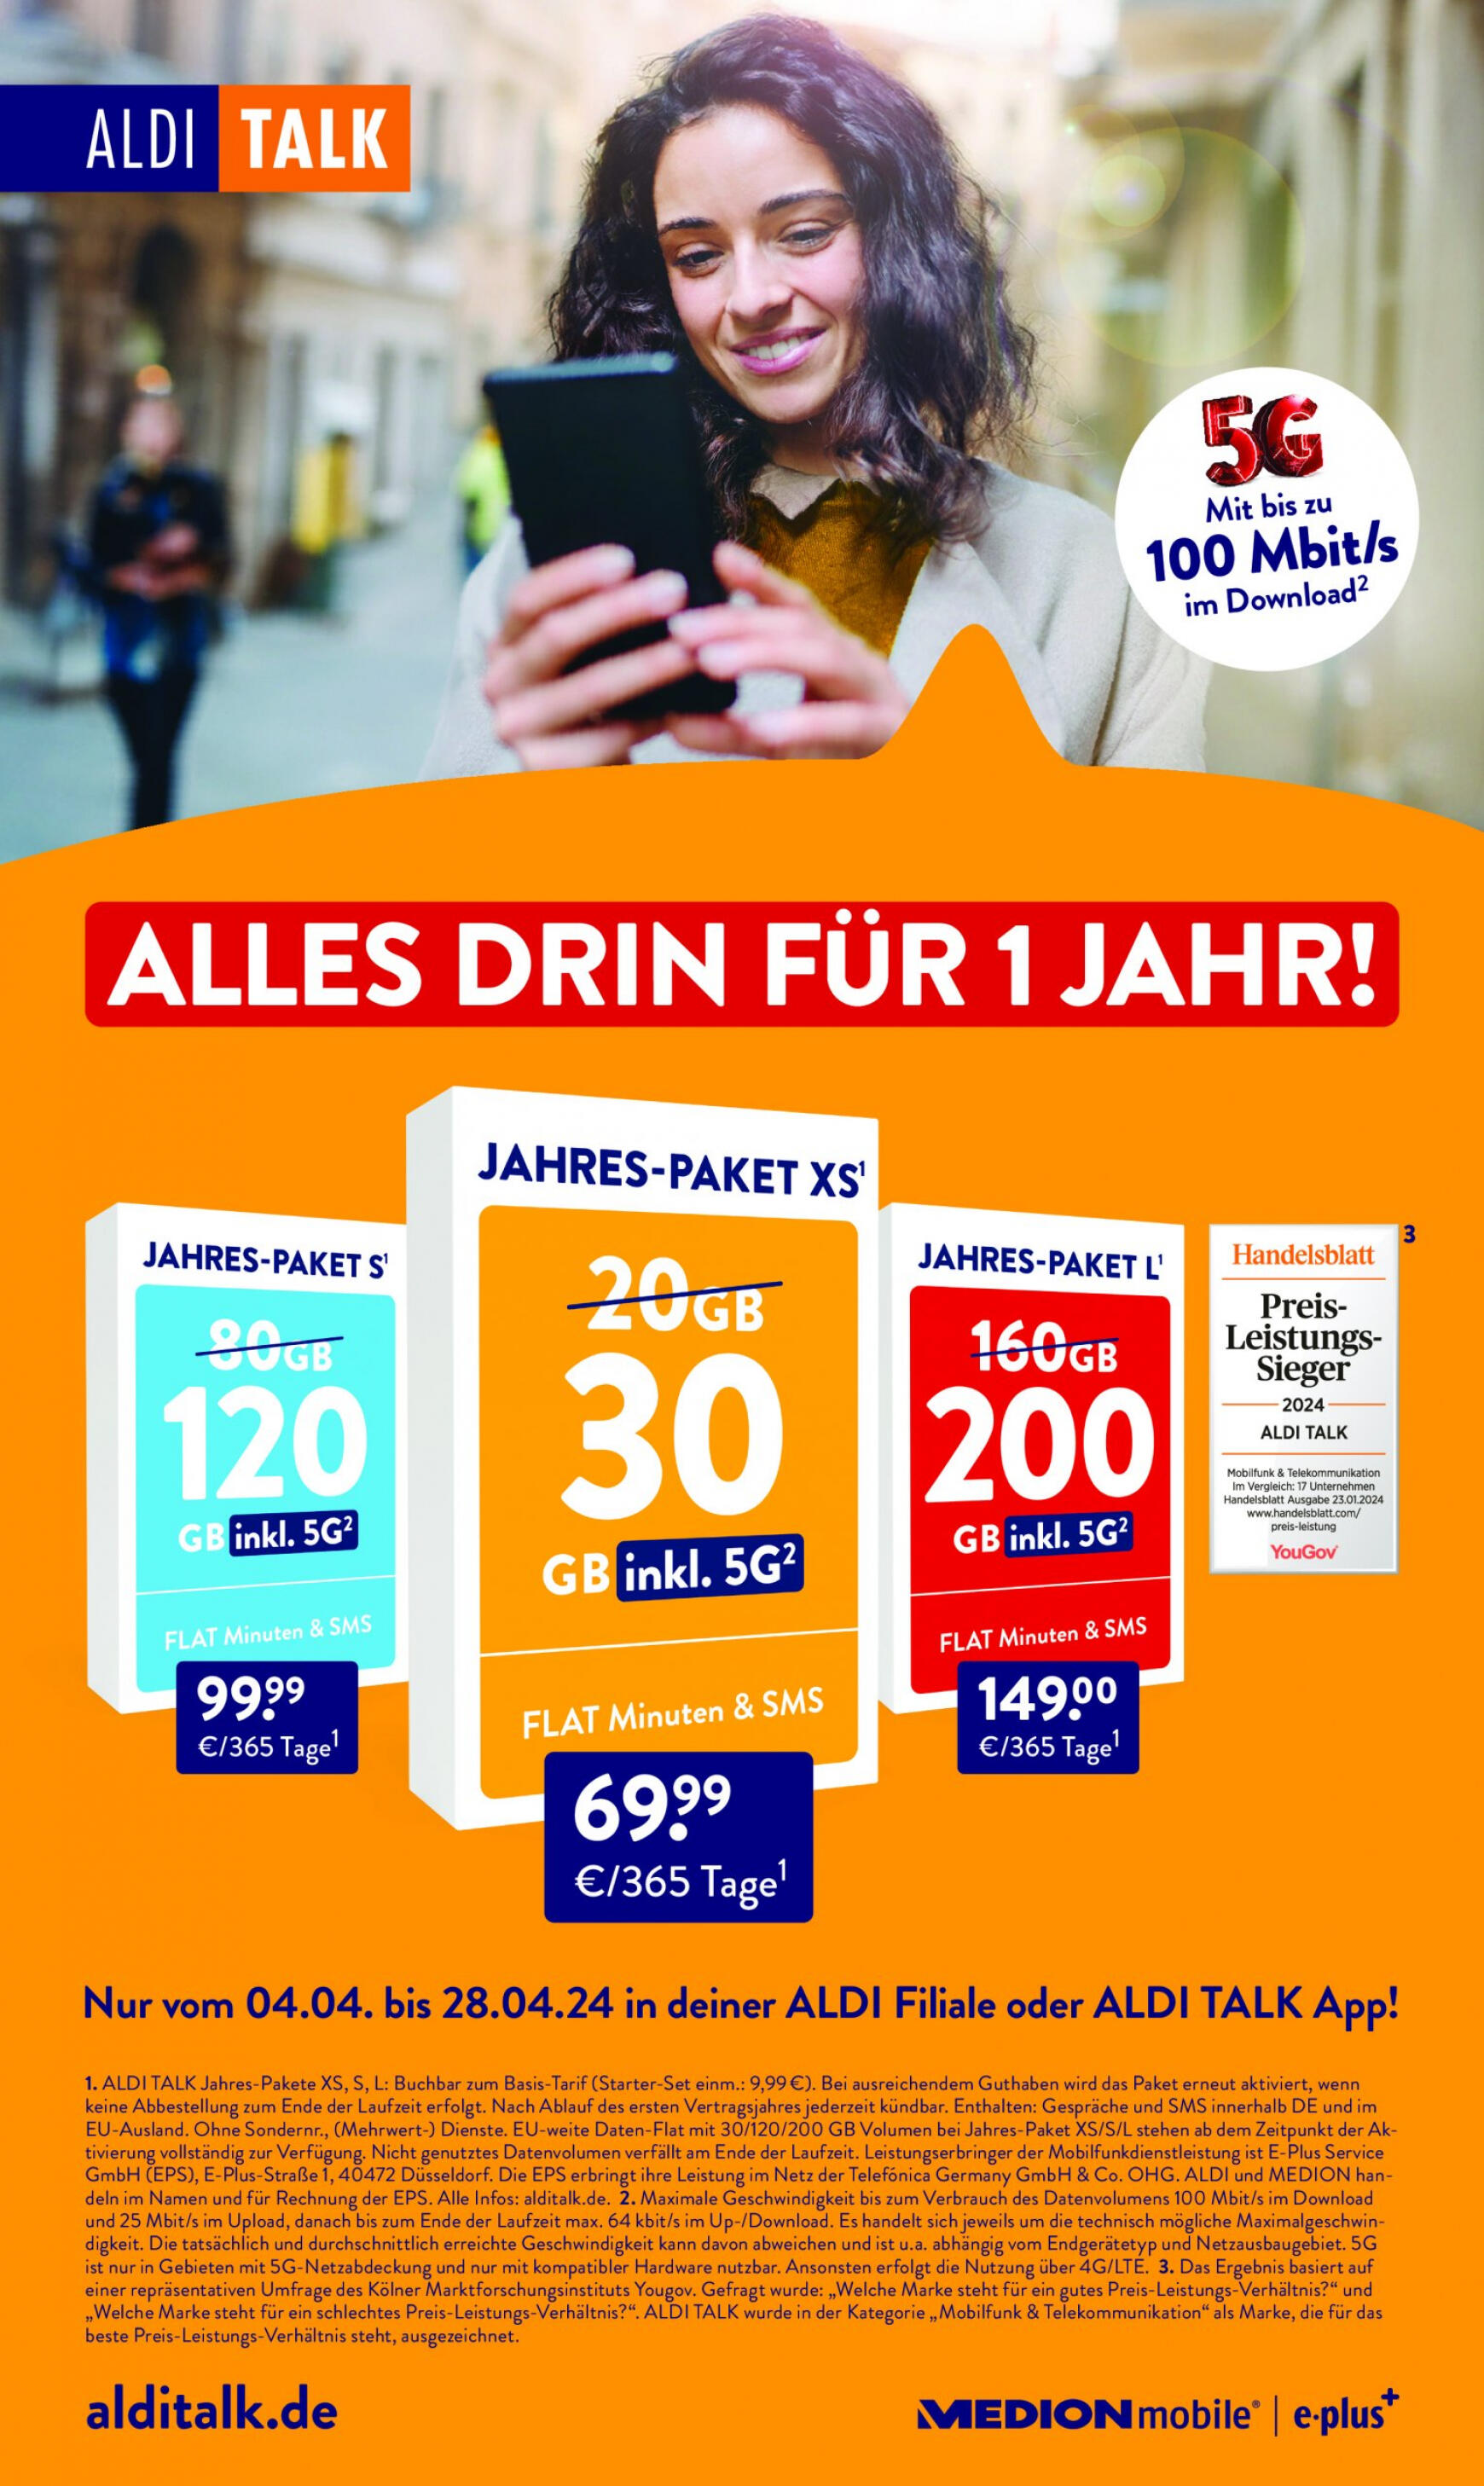 aldi - Flyer ALDI SÜD aktuell 22.04. - 27.04. - page: 10